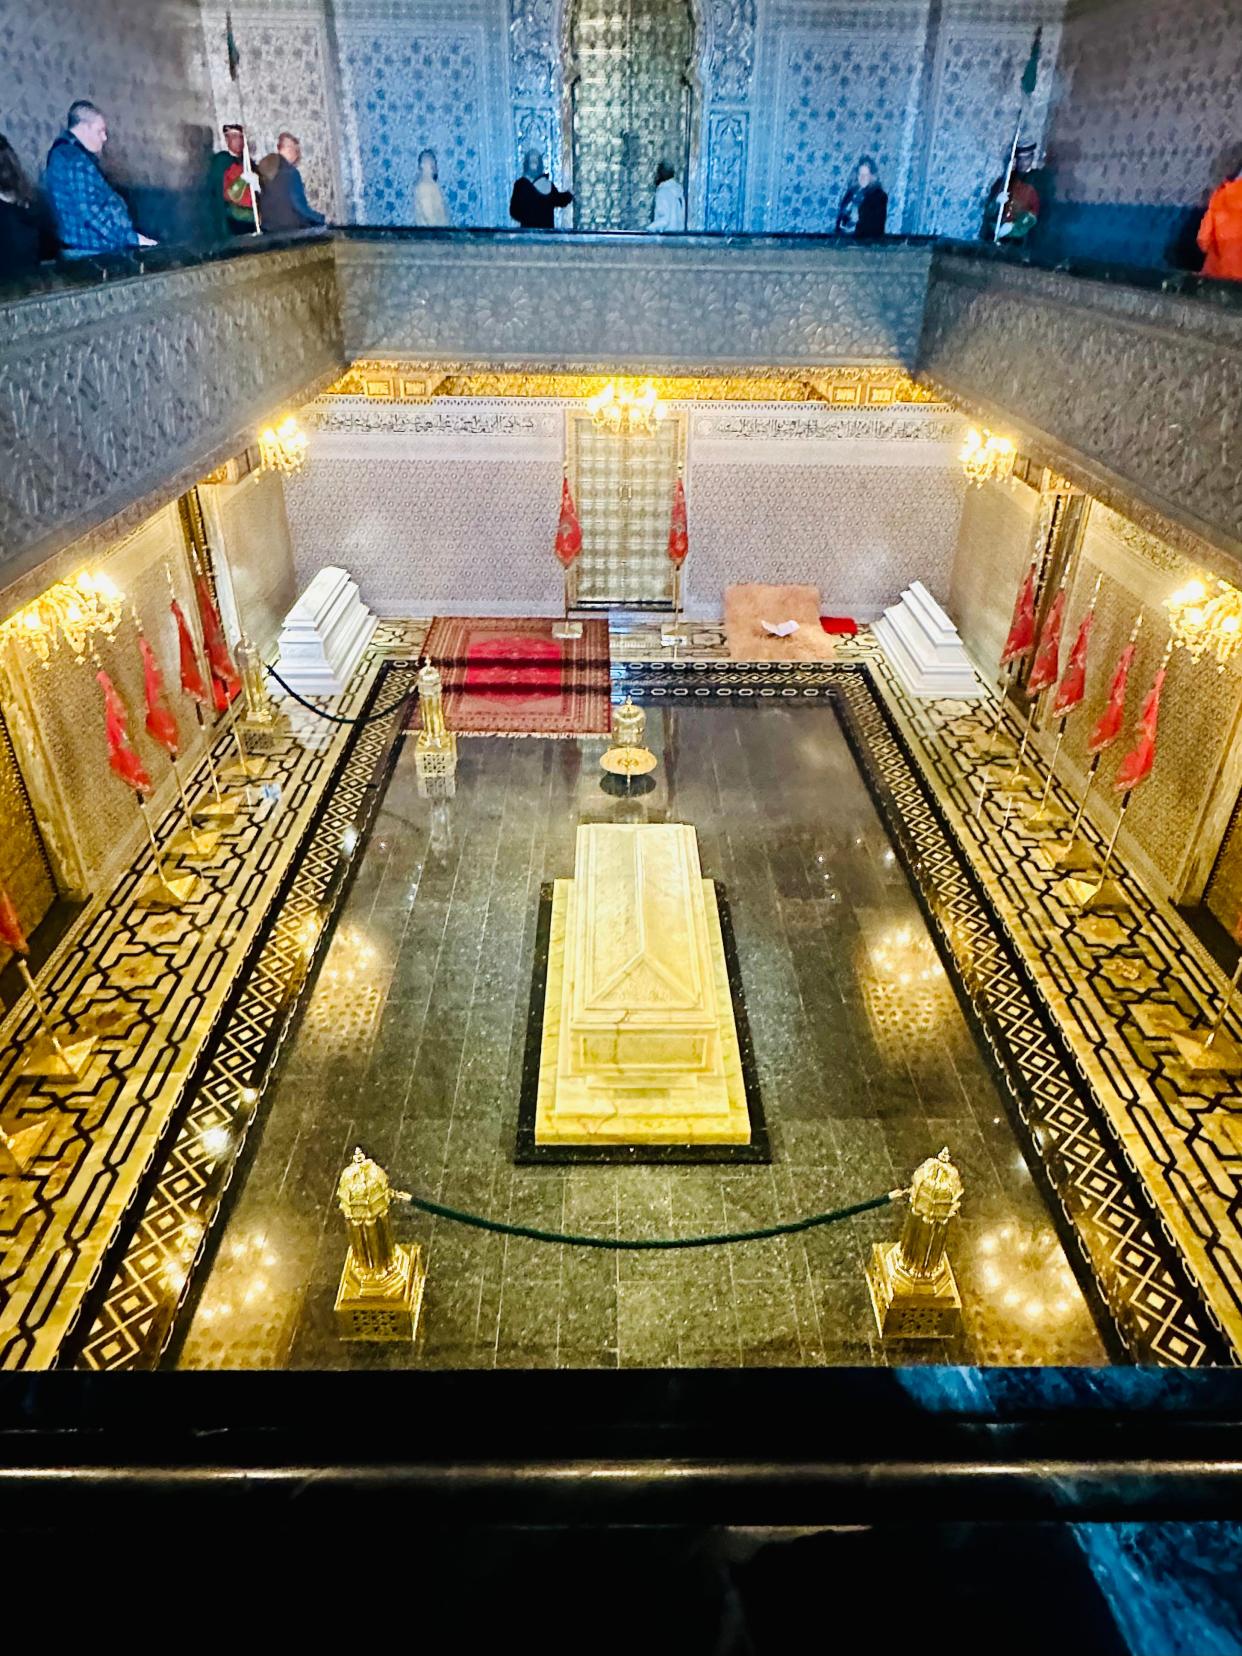 The inside of the Mausoleum of Mohammed V in Rabat